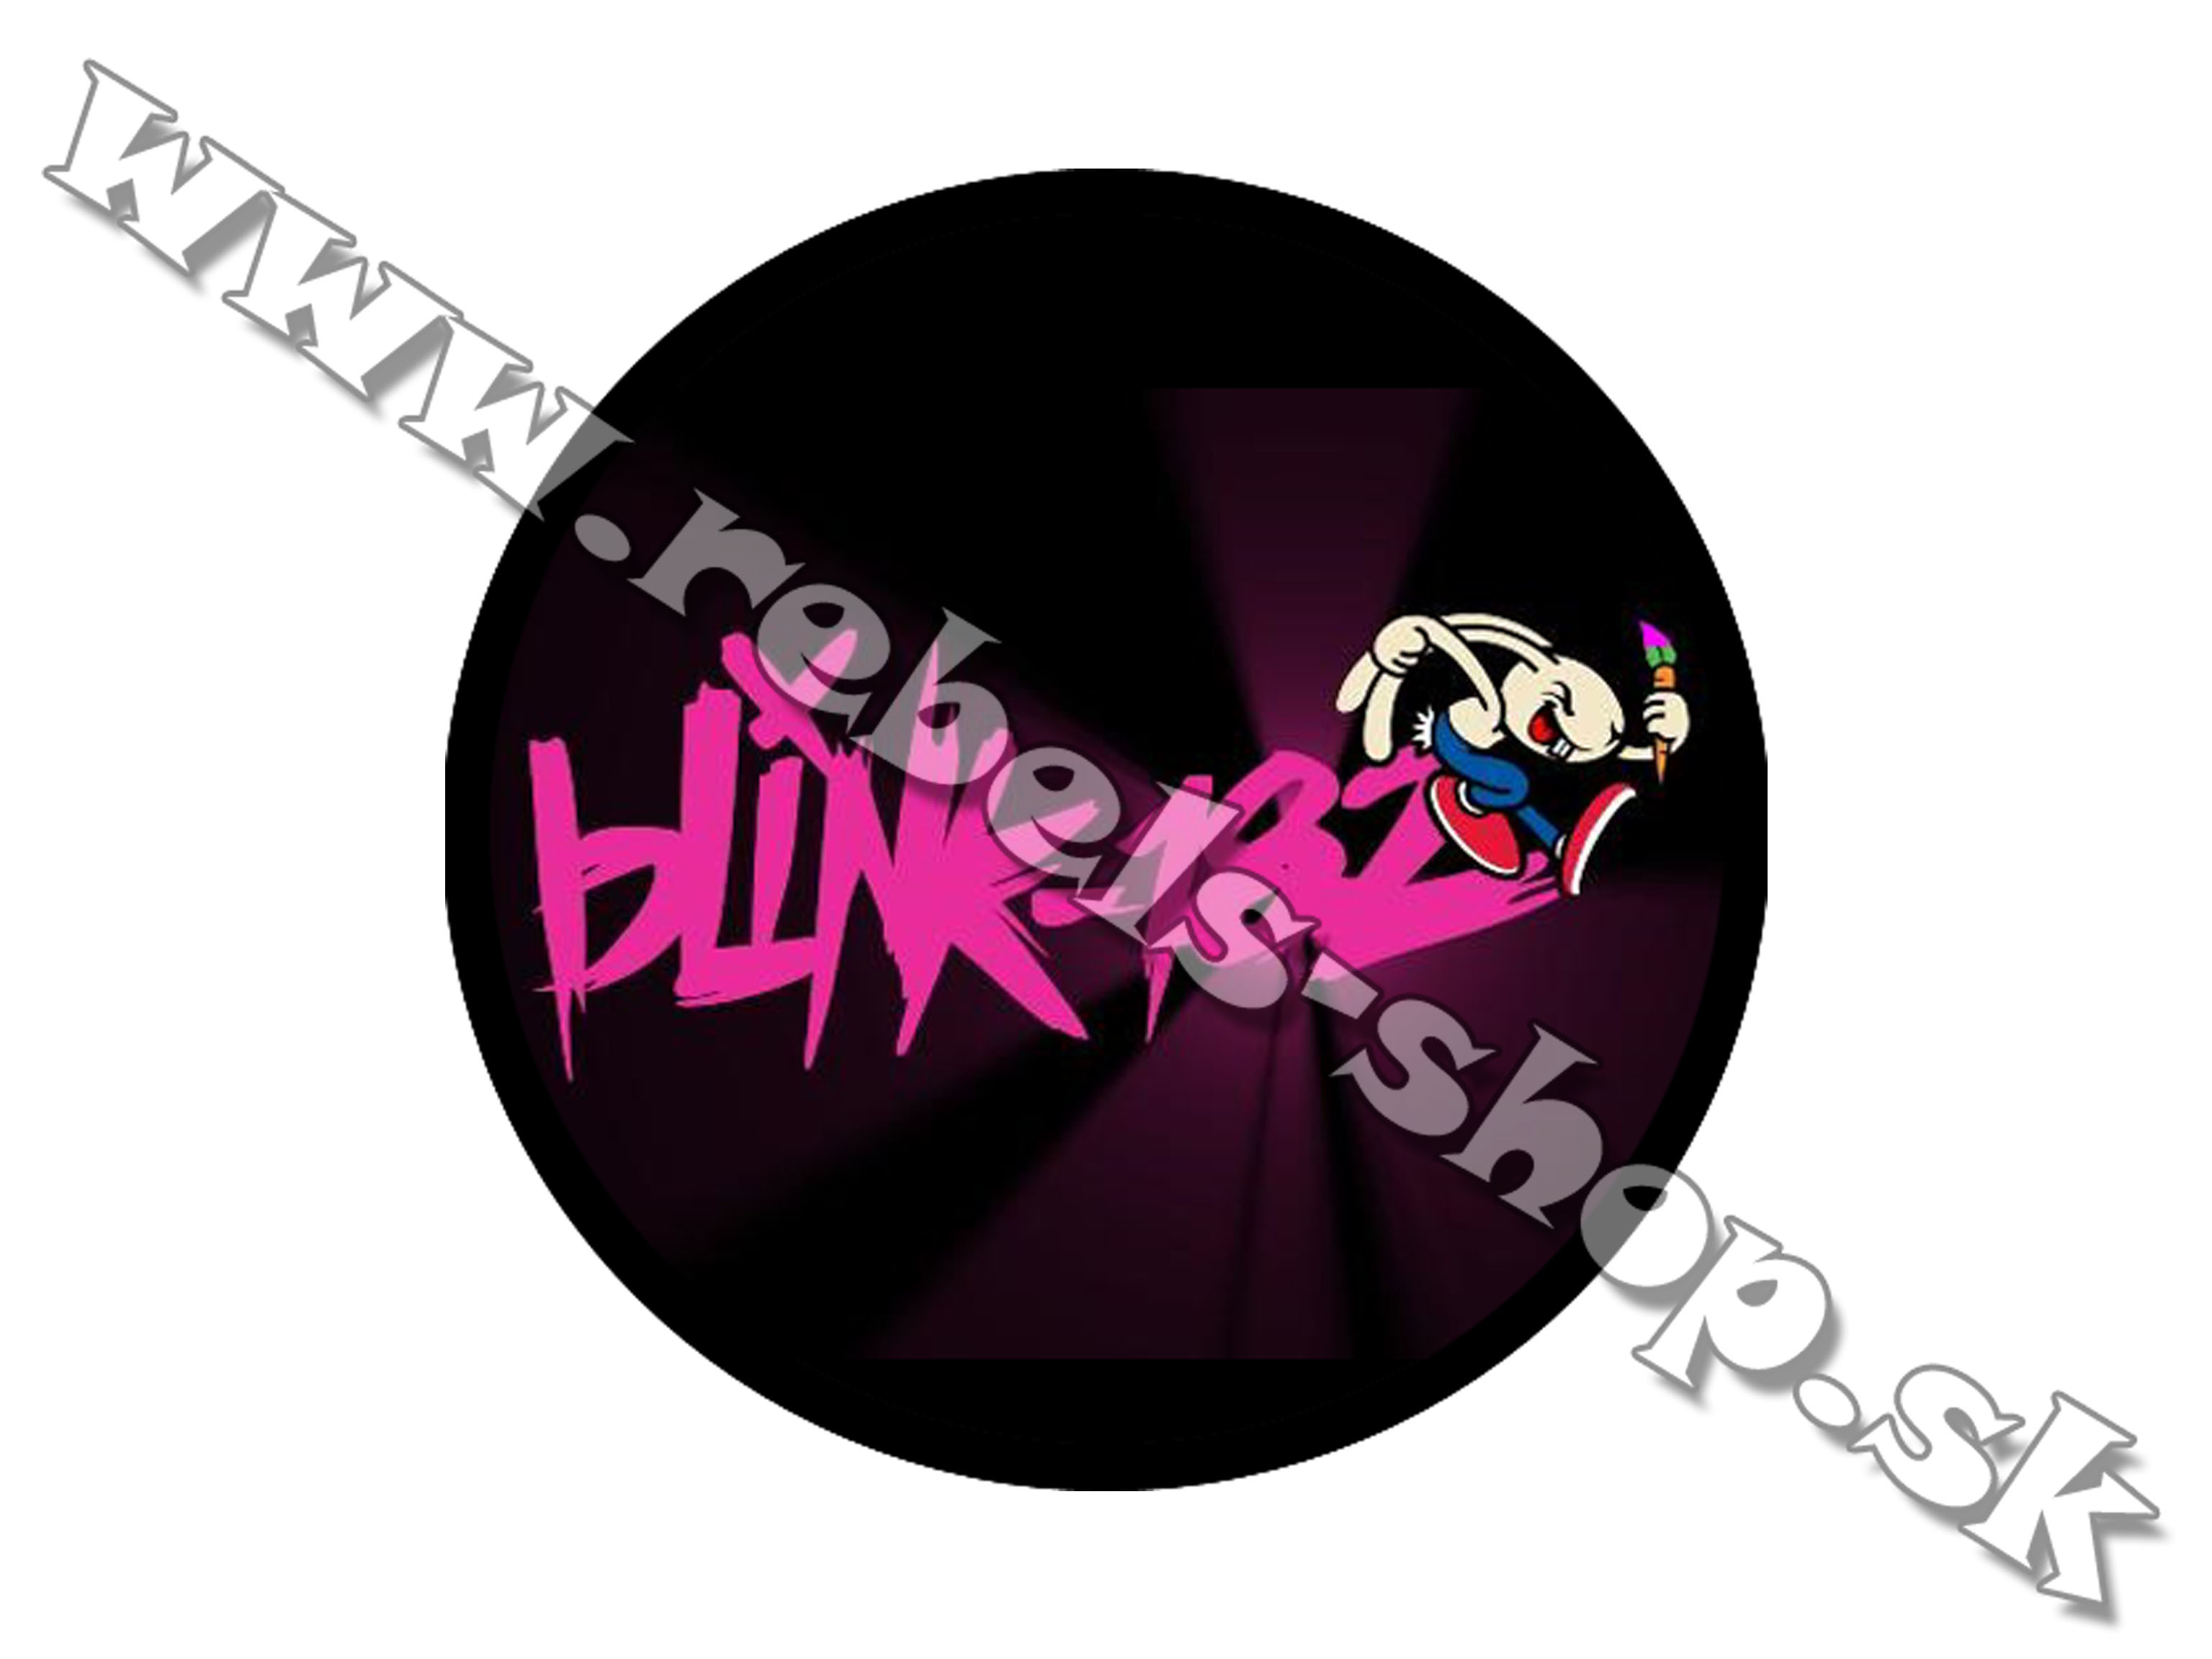 Odznak "Blink 182"